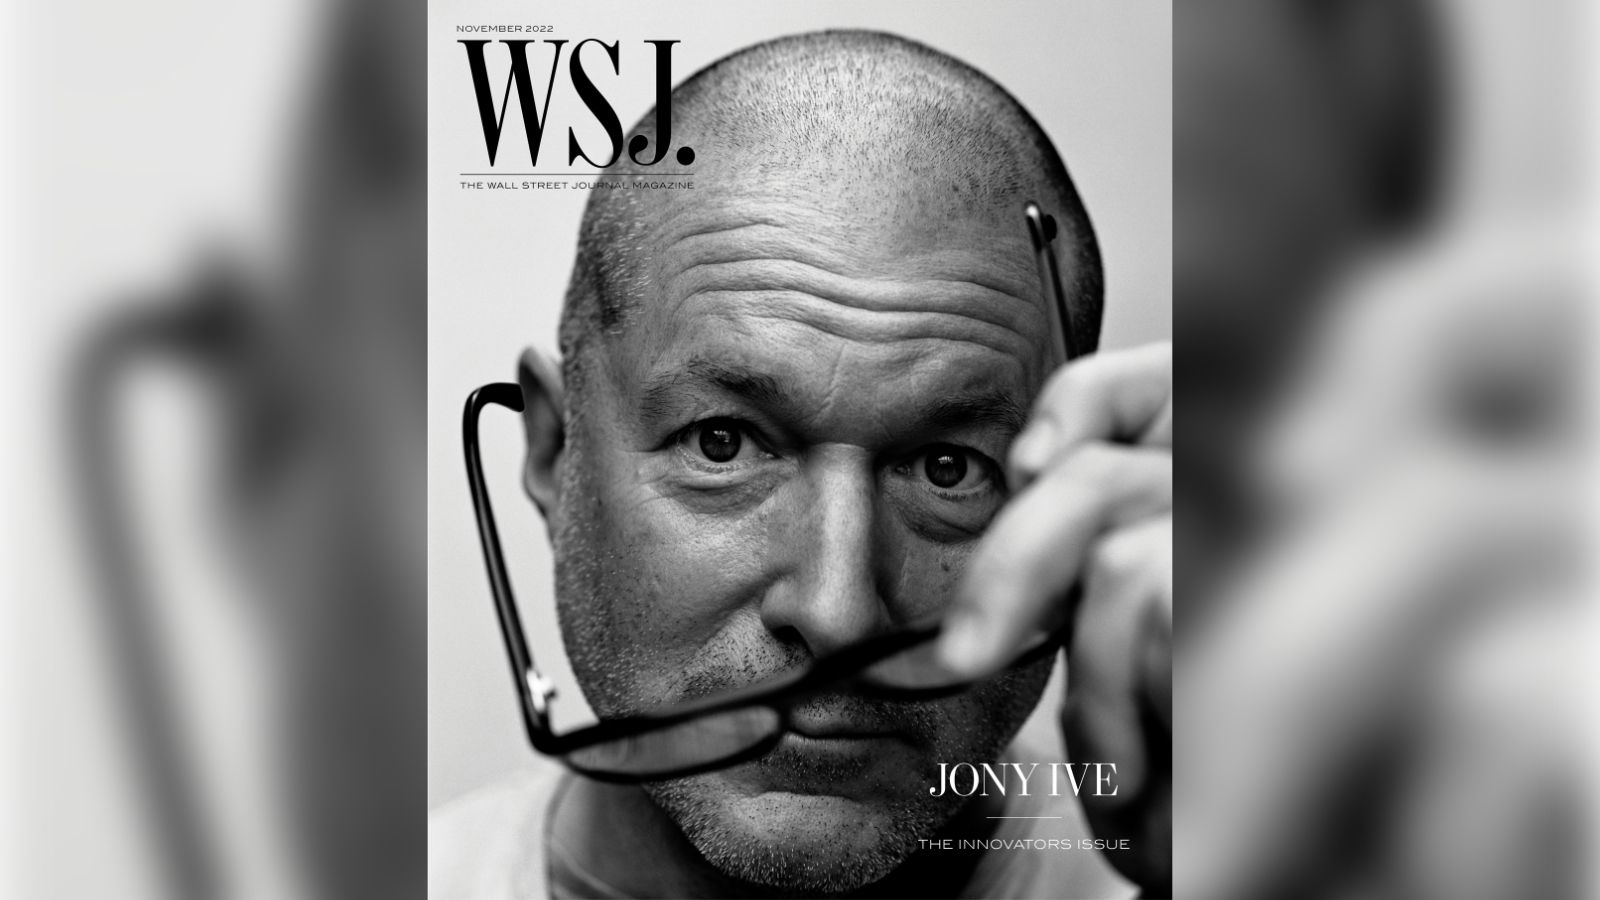 Jony Ive Featured on WSJ. Magazine Cover, Talks Work at Apple and Design Philosophy - macrumors.com